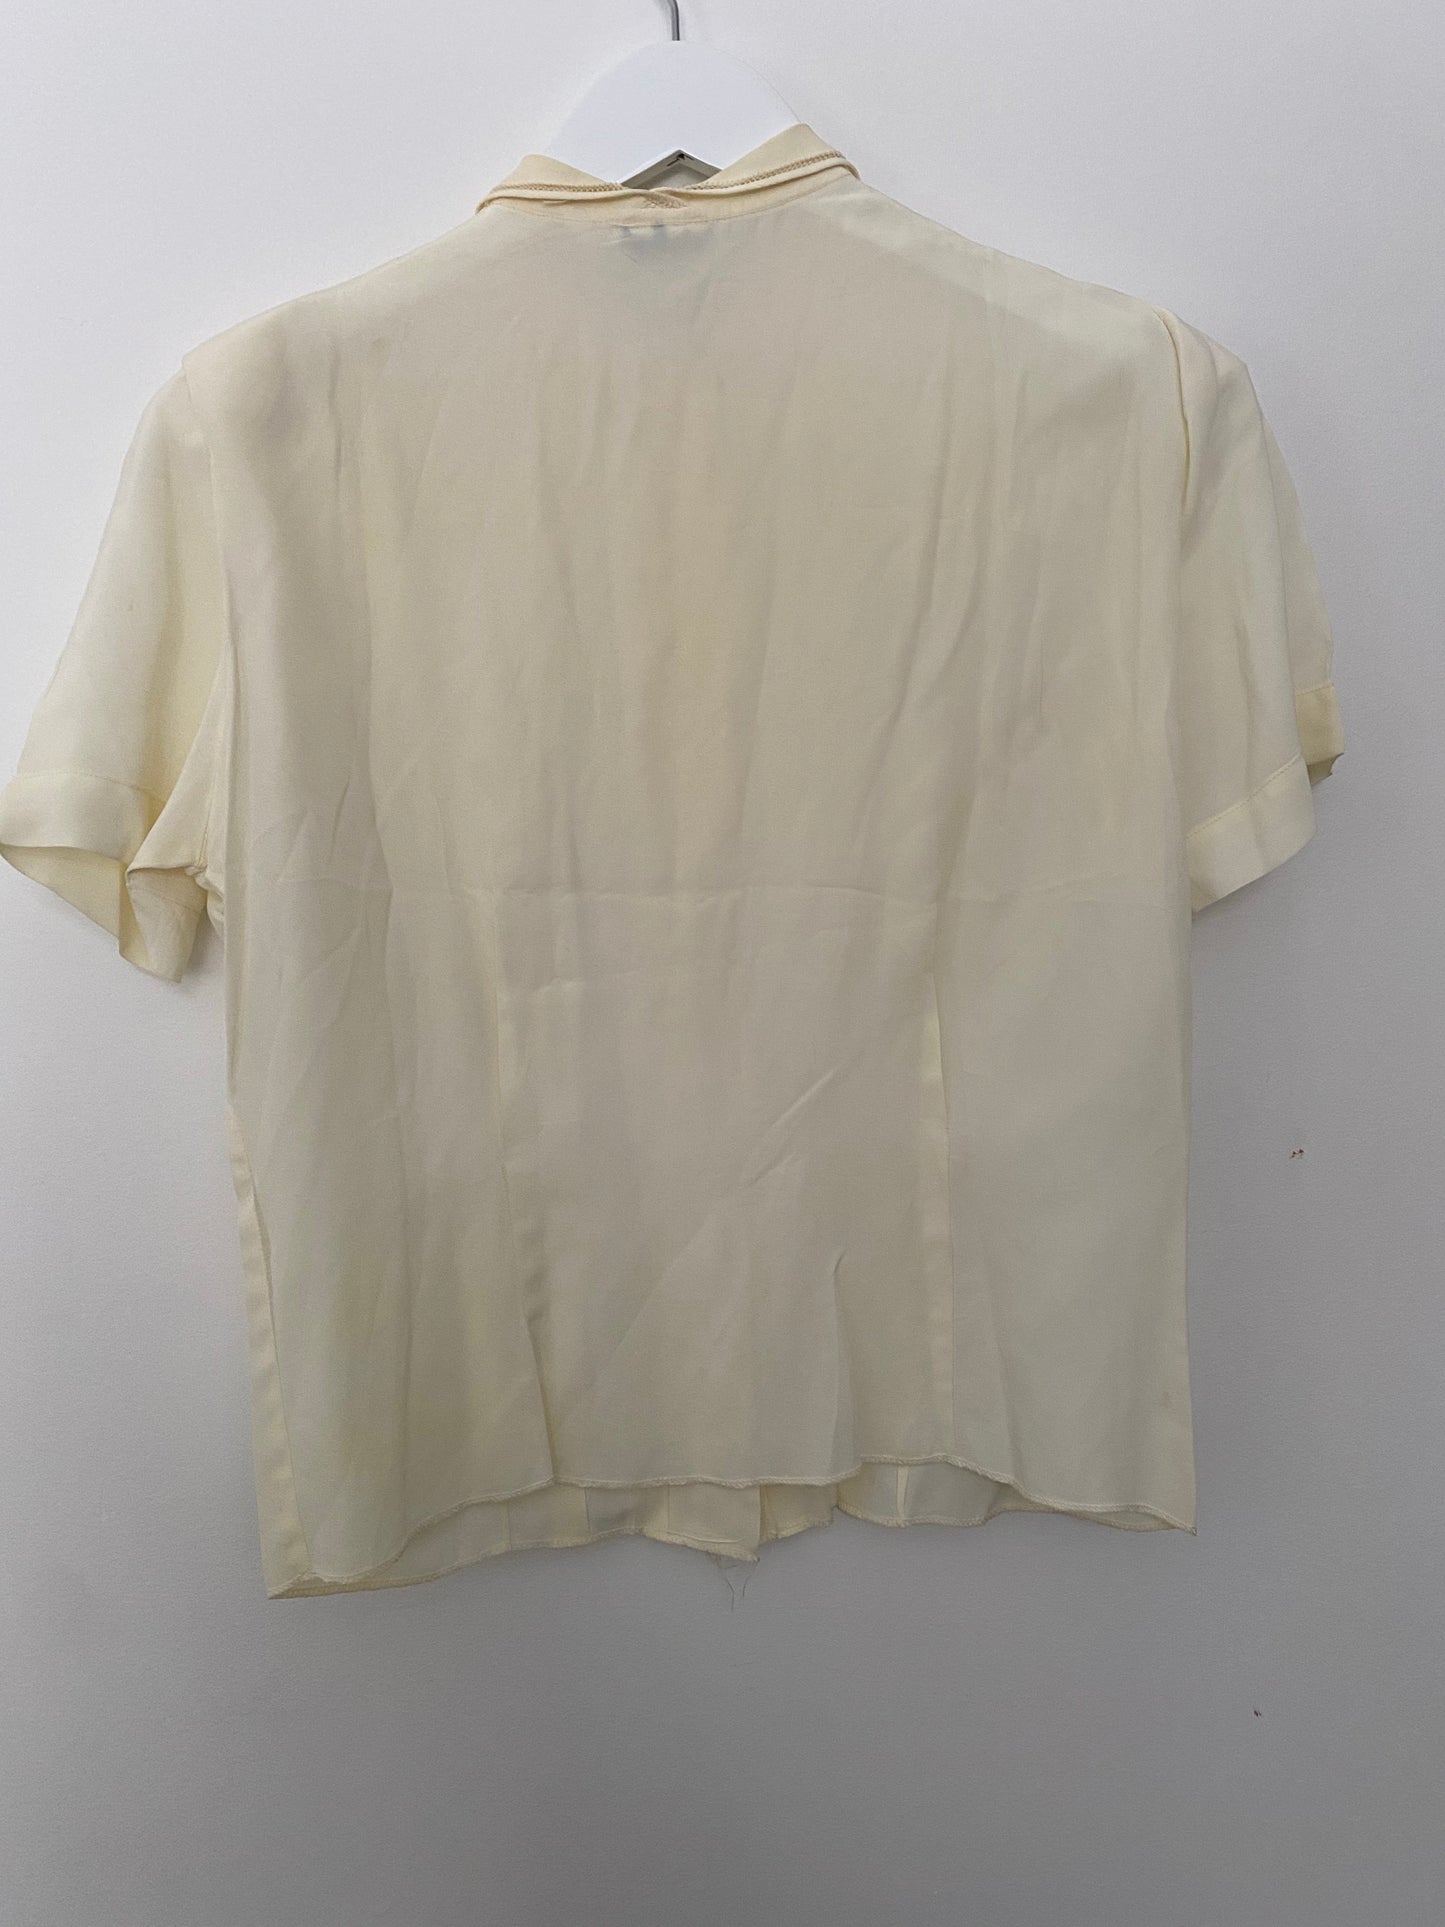 1950’s scalloped blouse